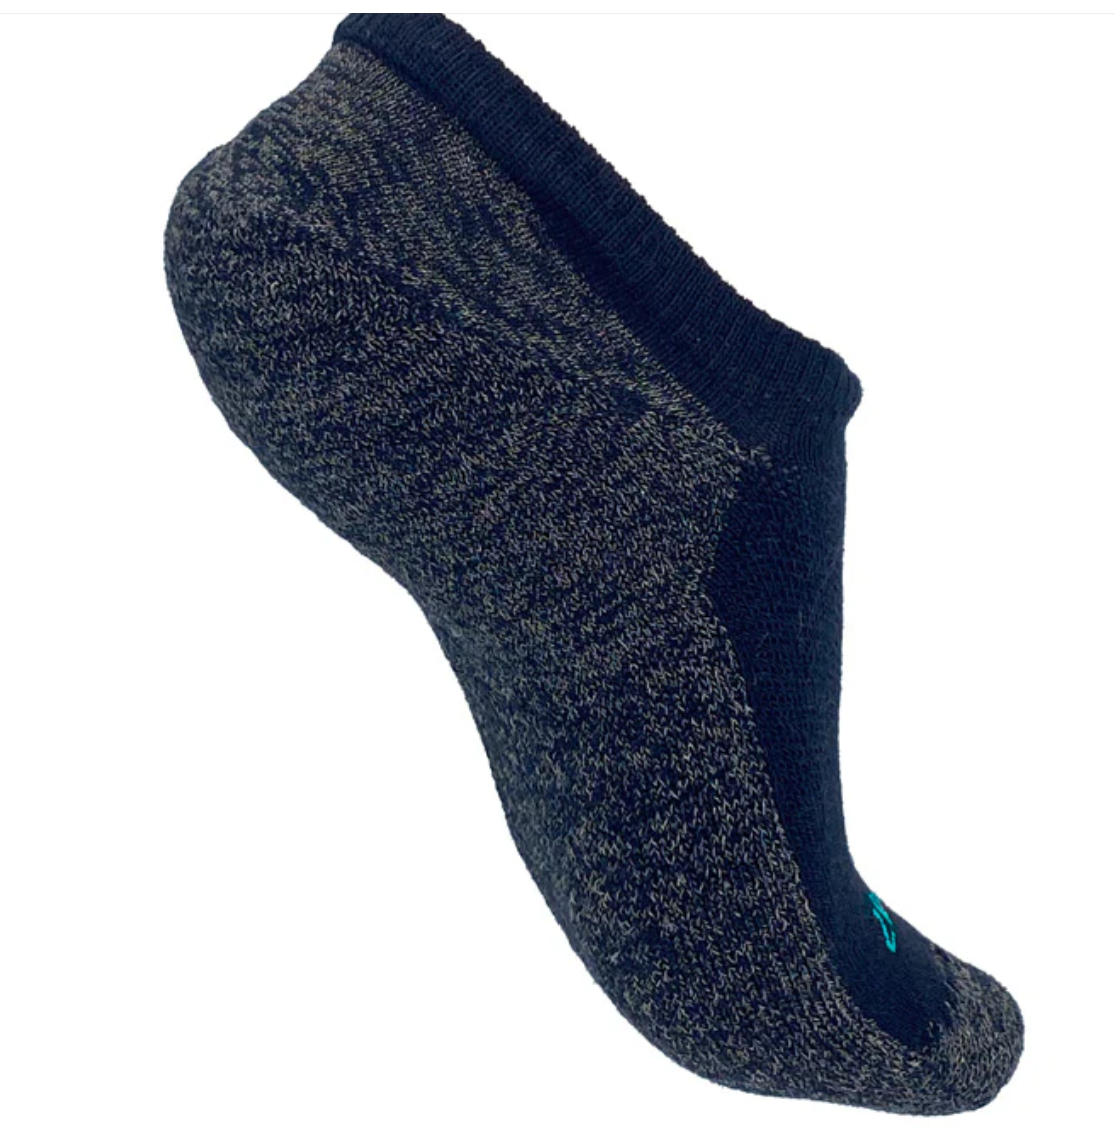 Tru47 - Black Grounding Low Cut Socks - Merino Wool